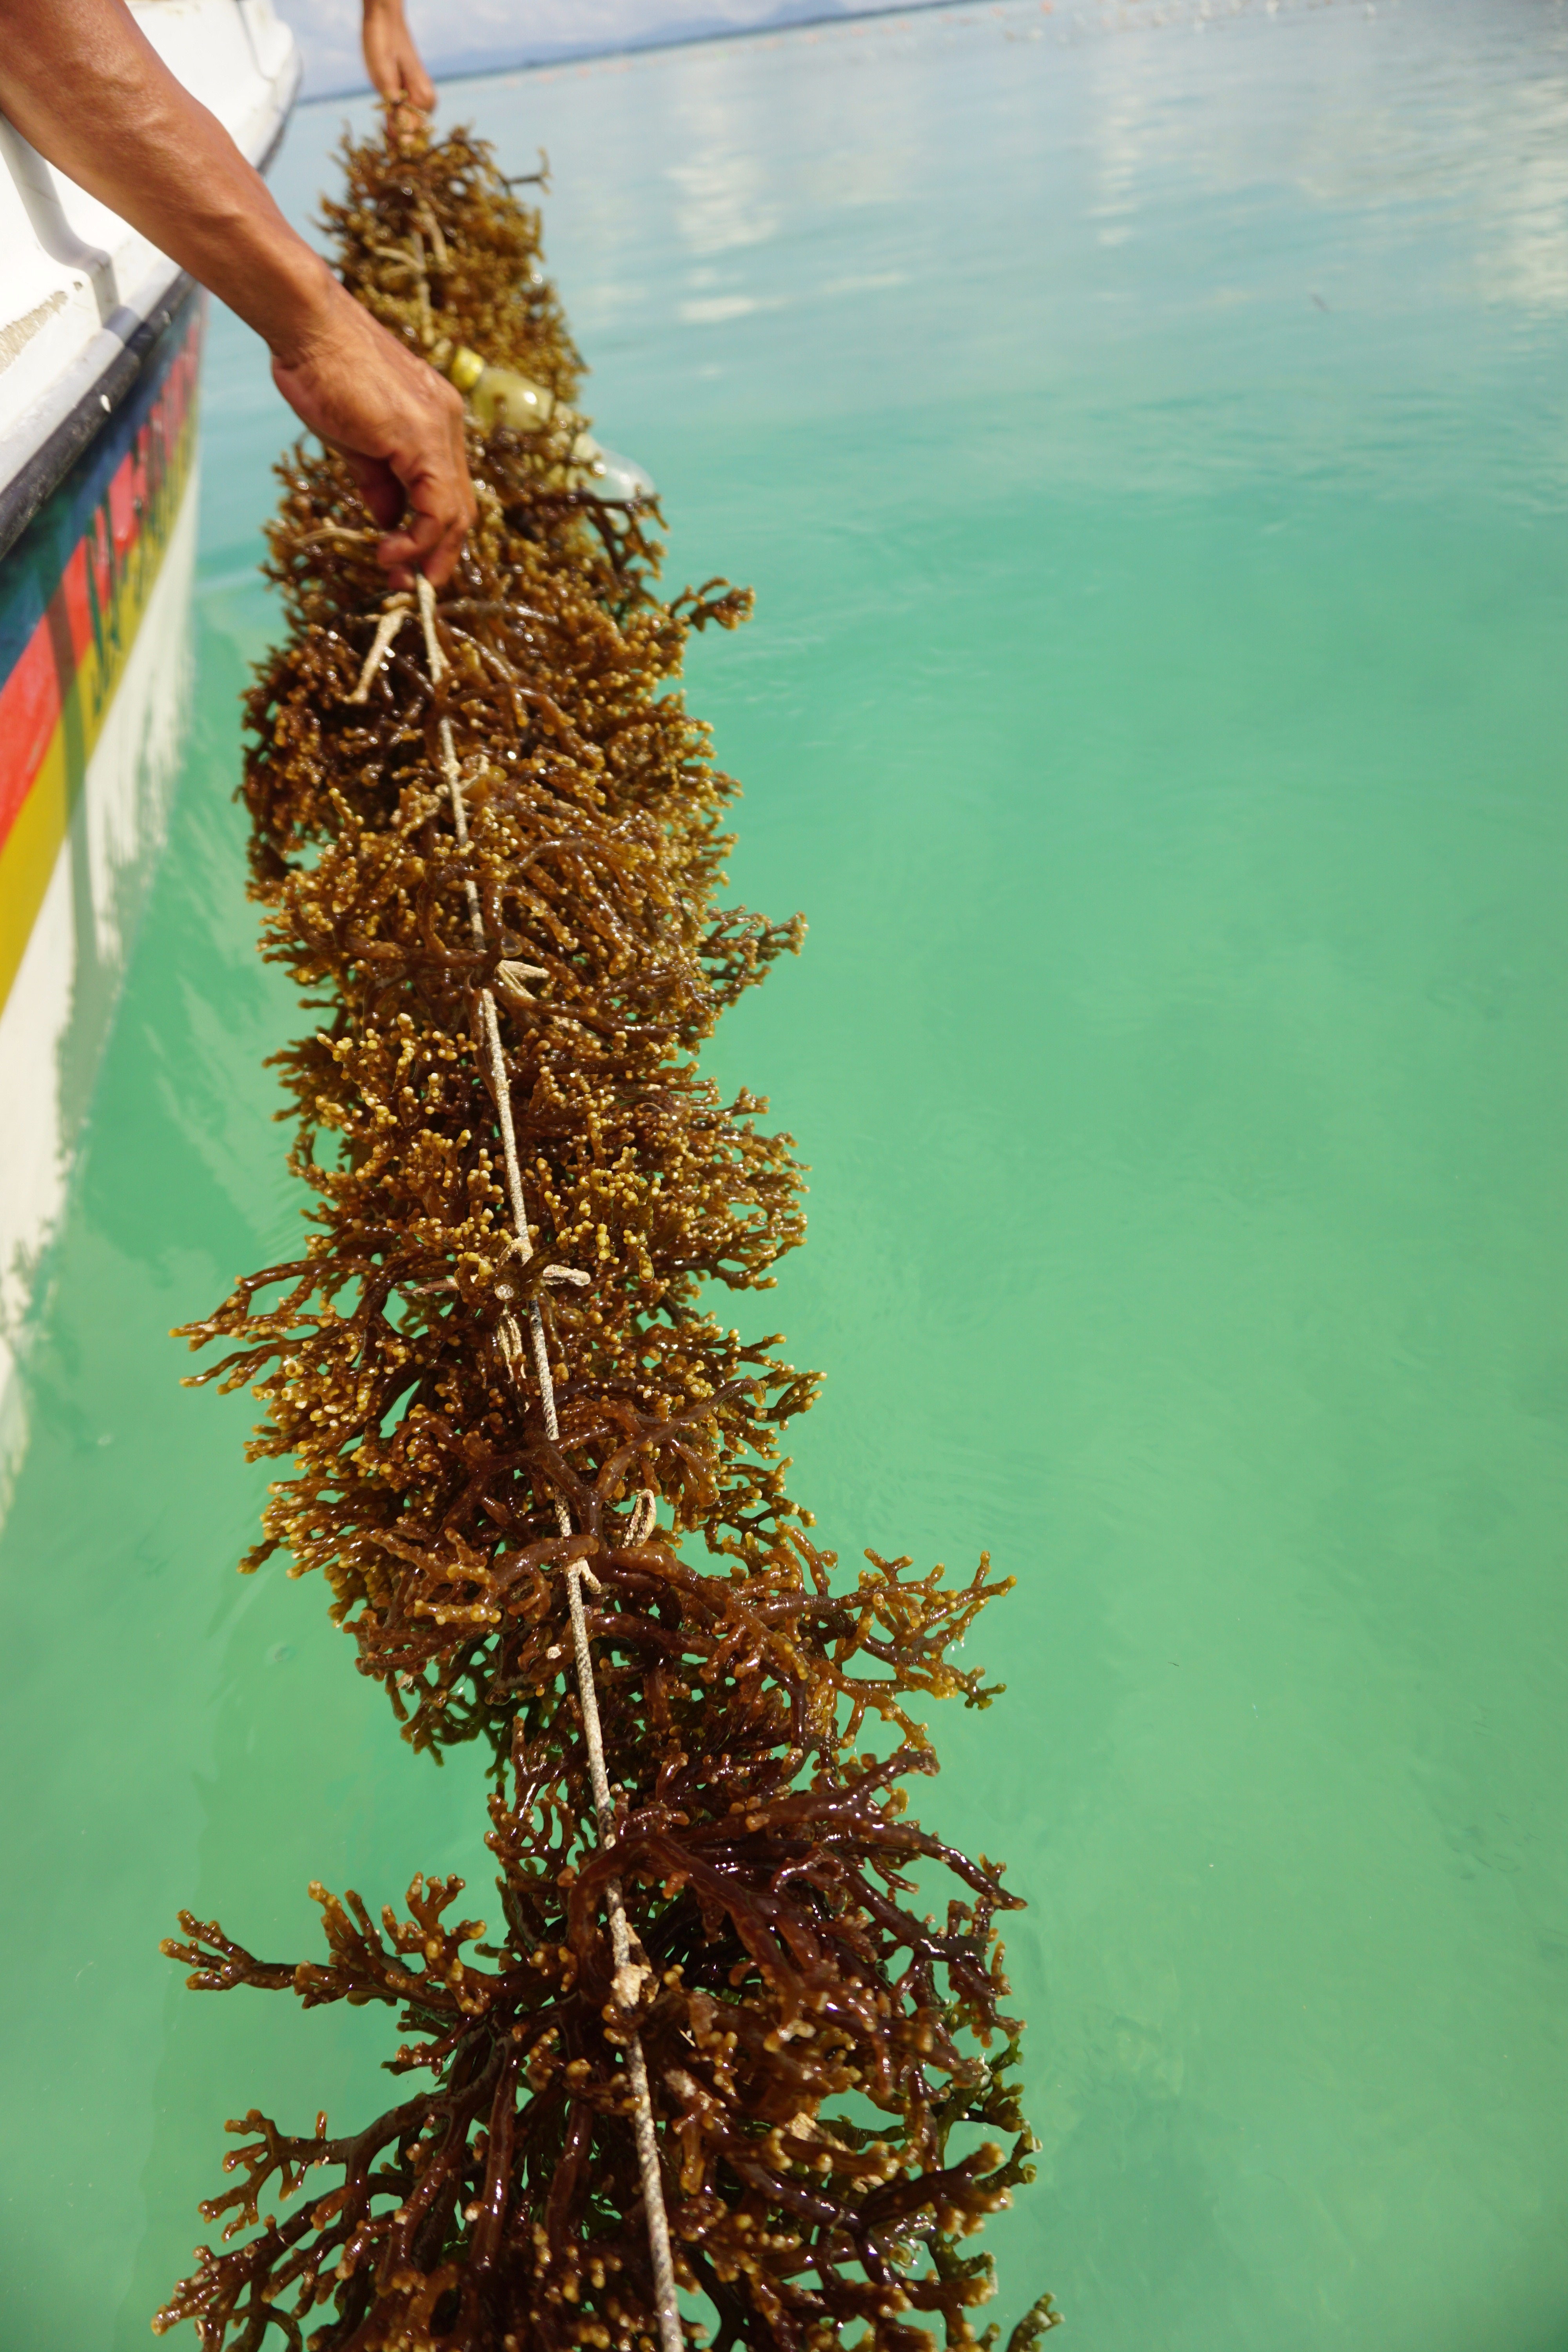 Seaweed (Image credits: Gracie White)